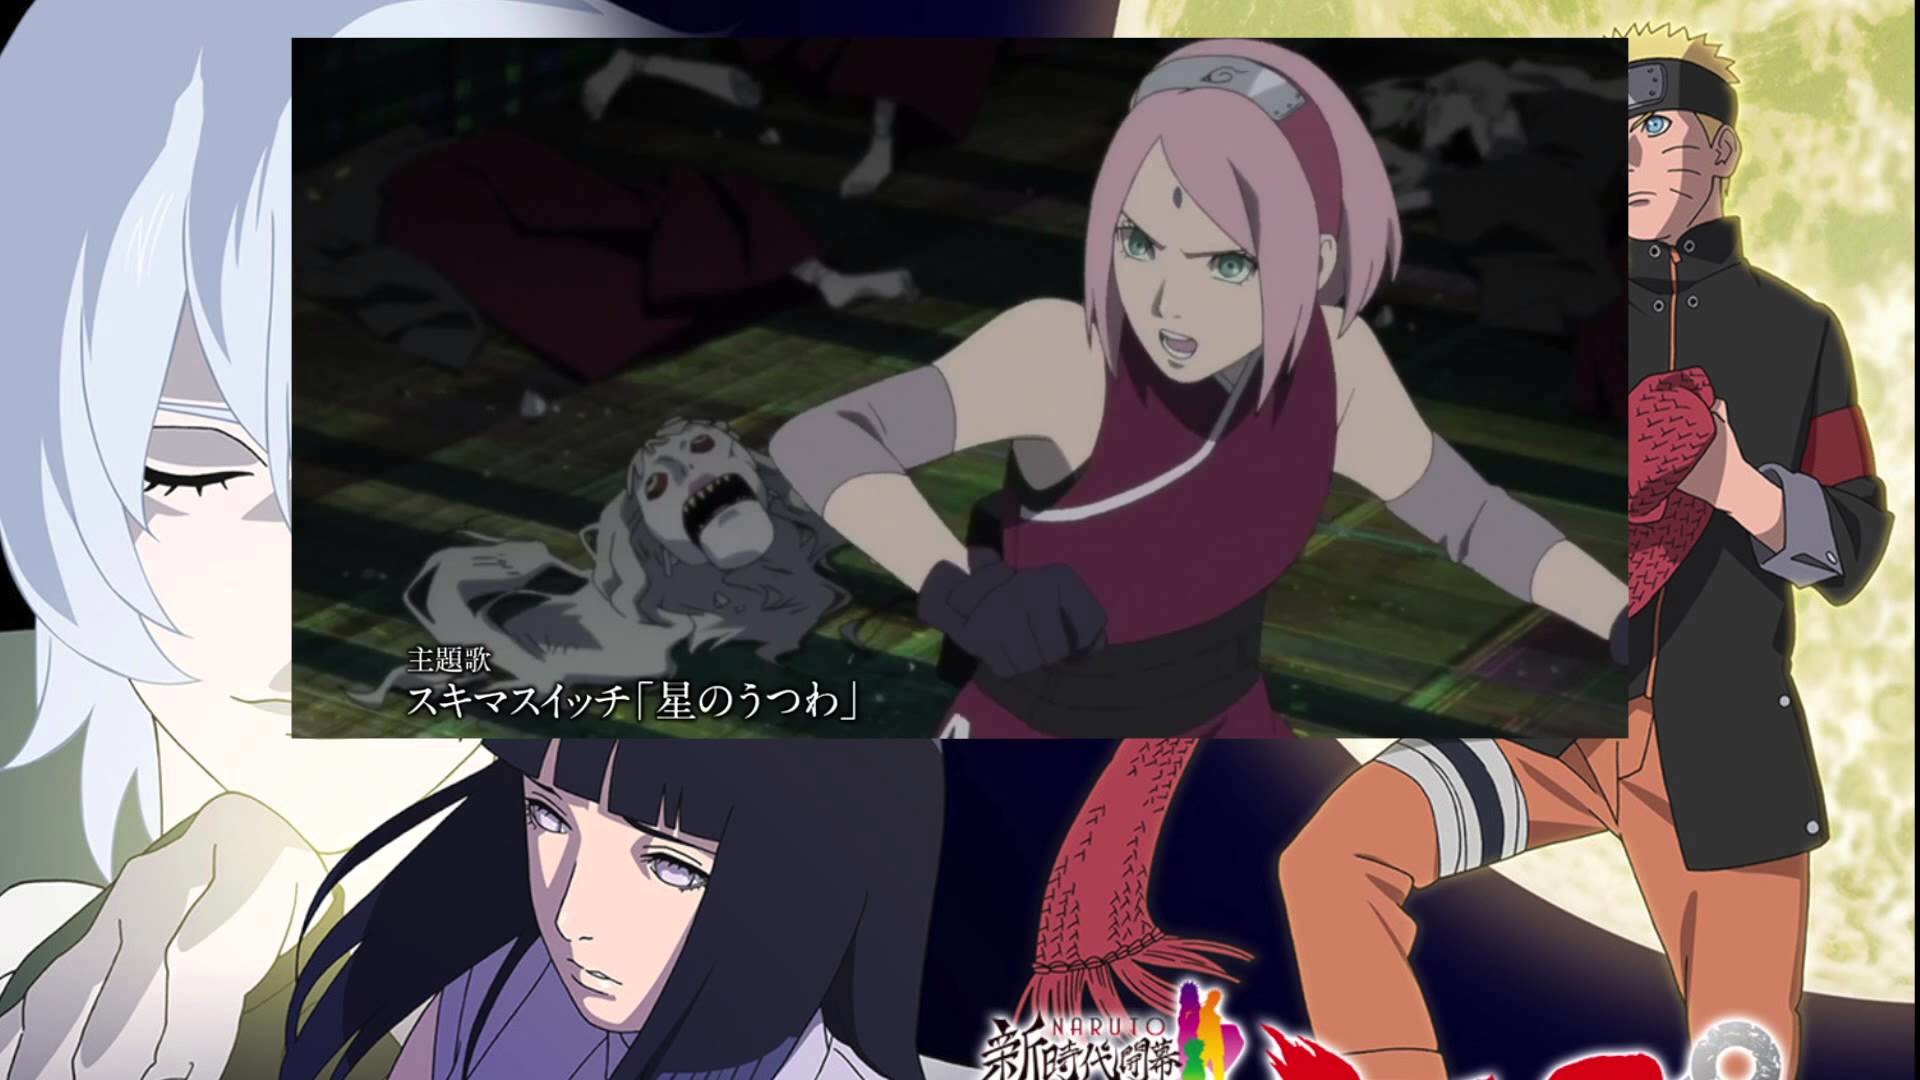 1920x1080 The Last Naruto the Movie: Sasuke Returns - Naruto vs Toneri TRAI...